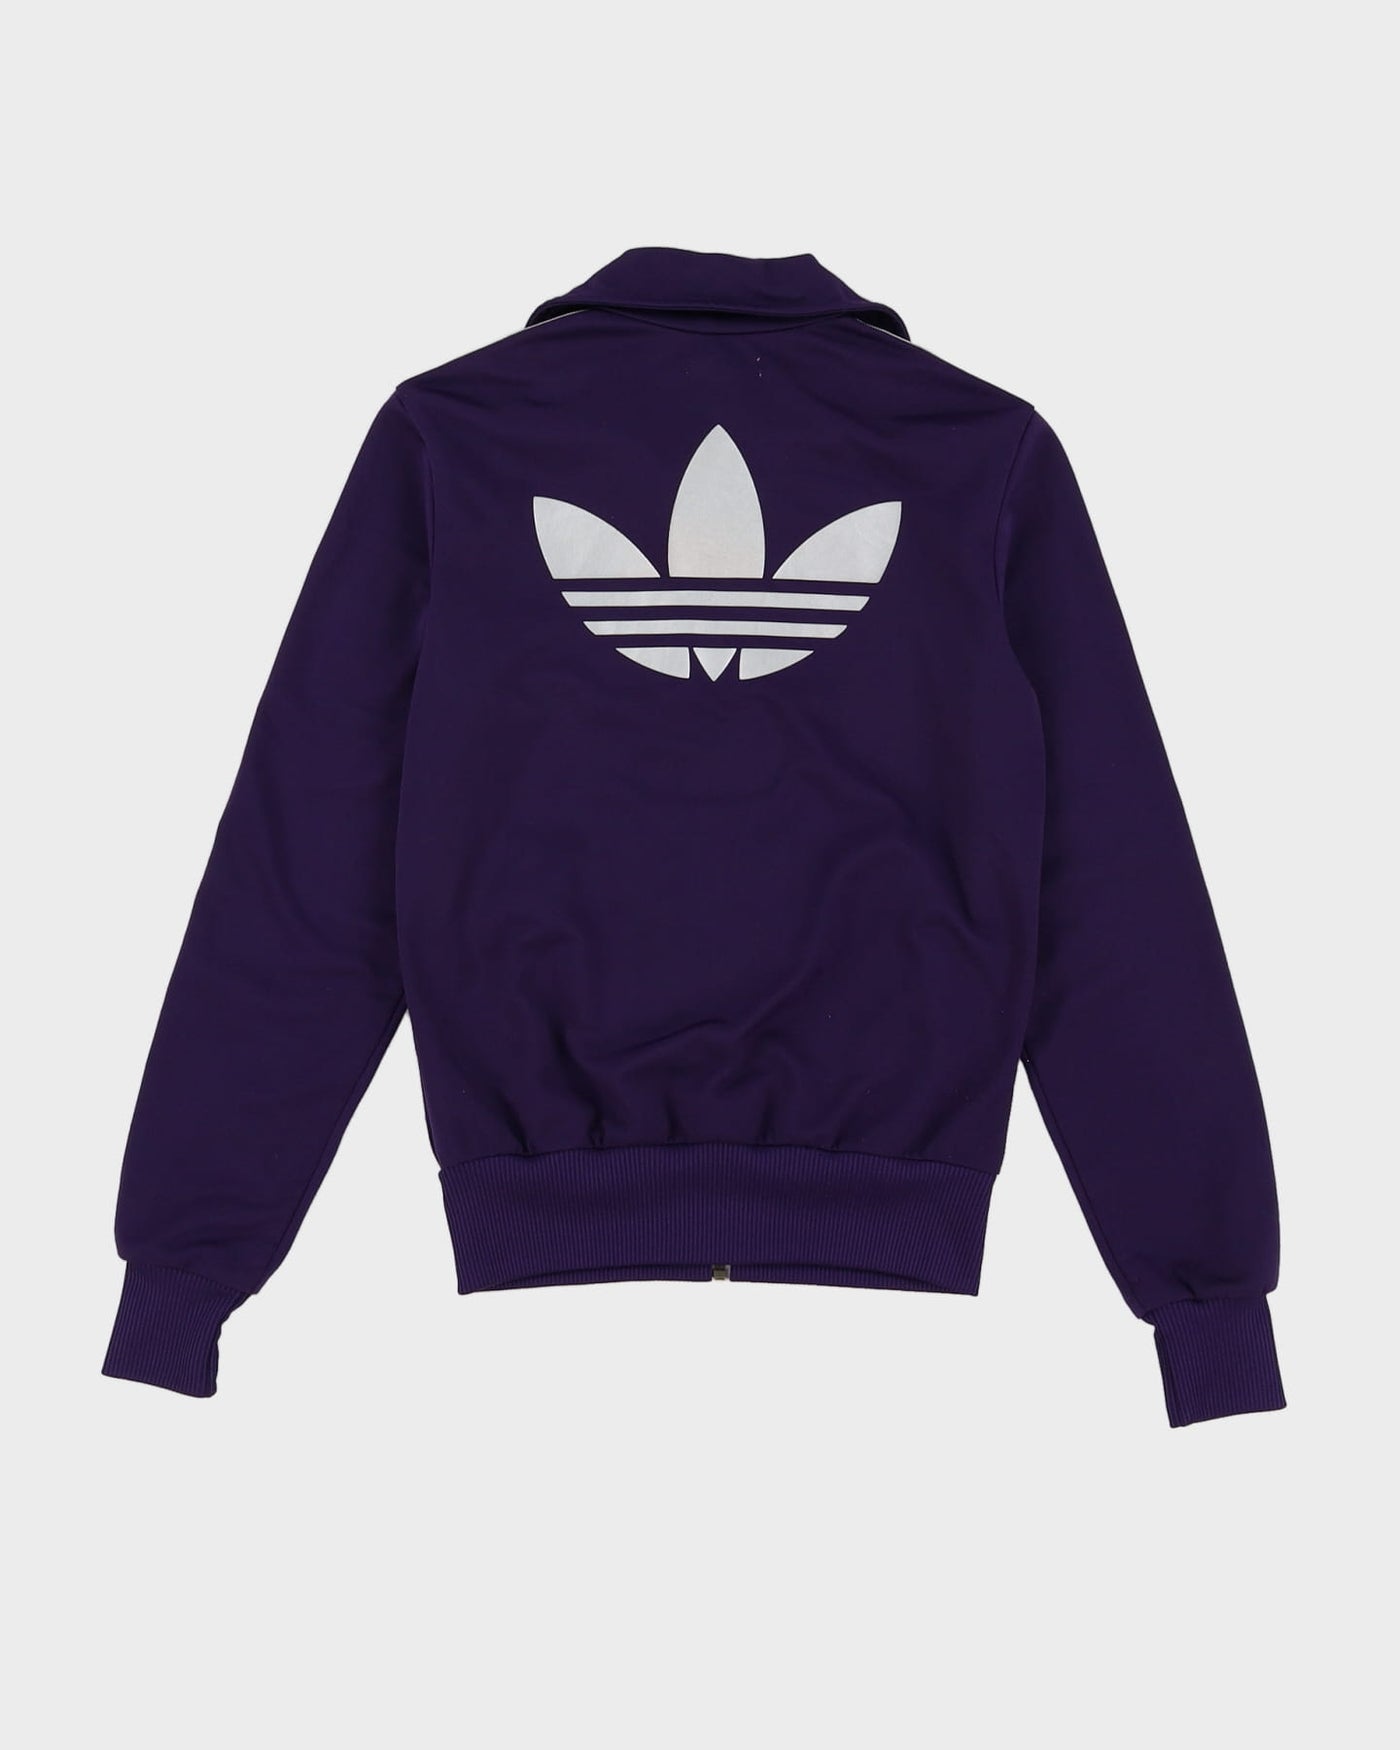 00s Adidas Purple / White Stripe Track Jacket - S / XS